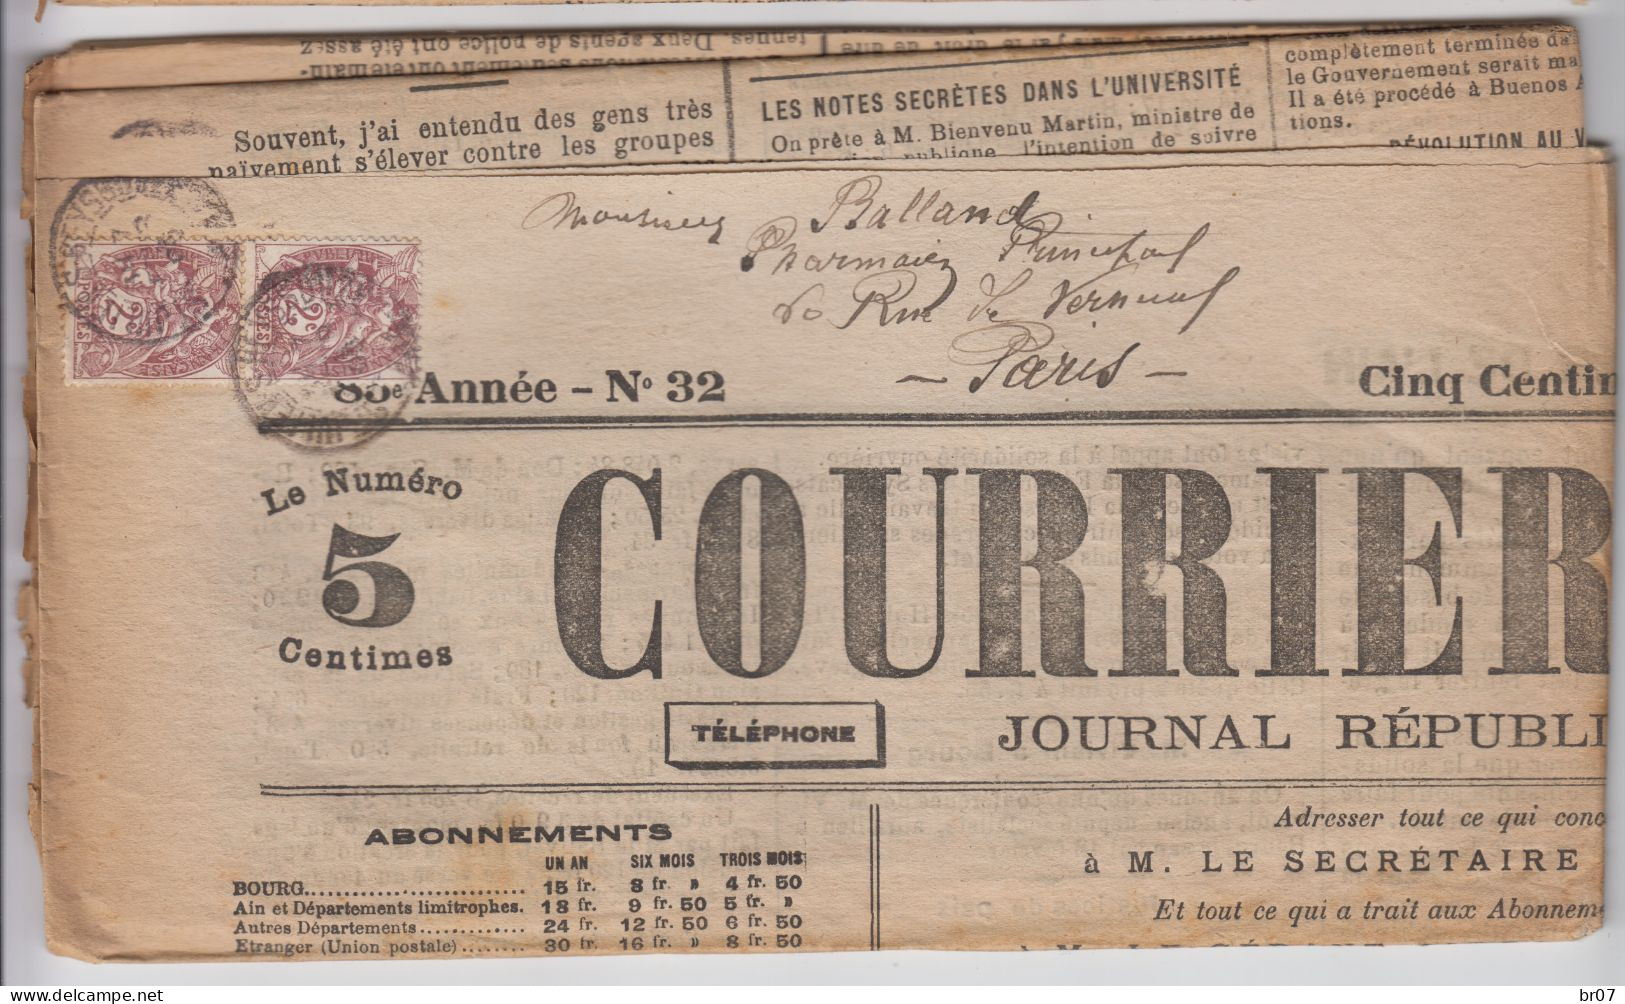 AIN JOURNAL SAMEDI 11 FEVRIER 1905 COURRIER DE L'AIN TARIF 4C TYPE BLANC N°108 X 2 OBLIT T84 ST JULIEN DE REYSSOUZE - Newspapers